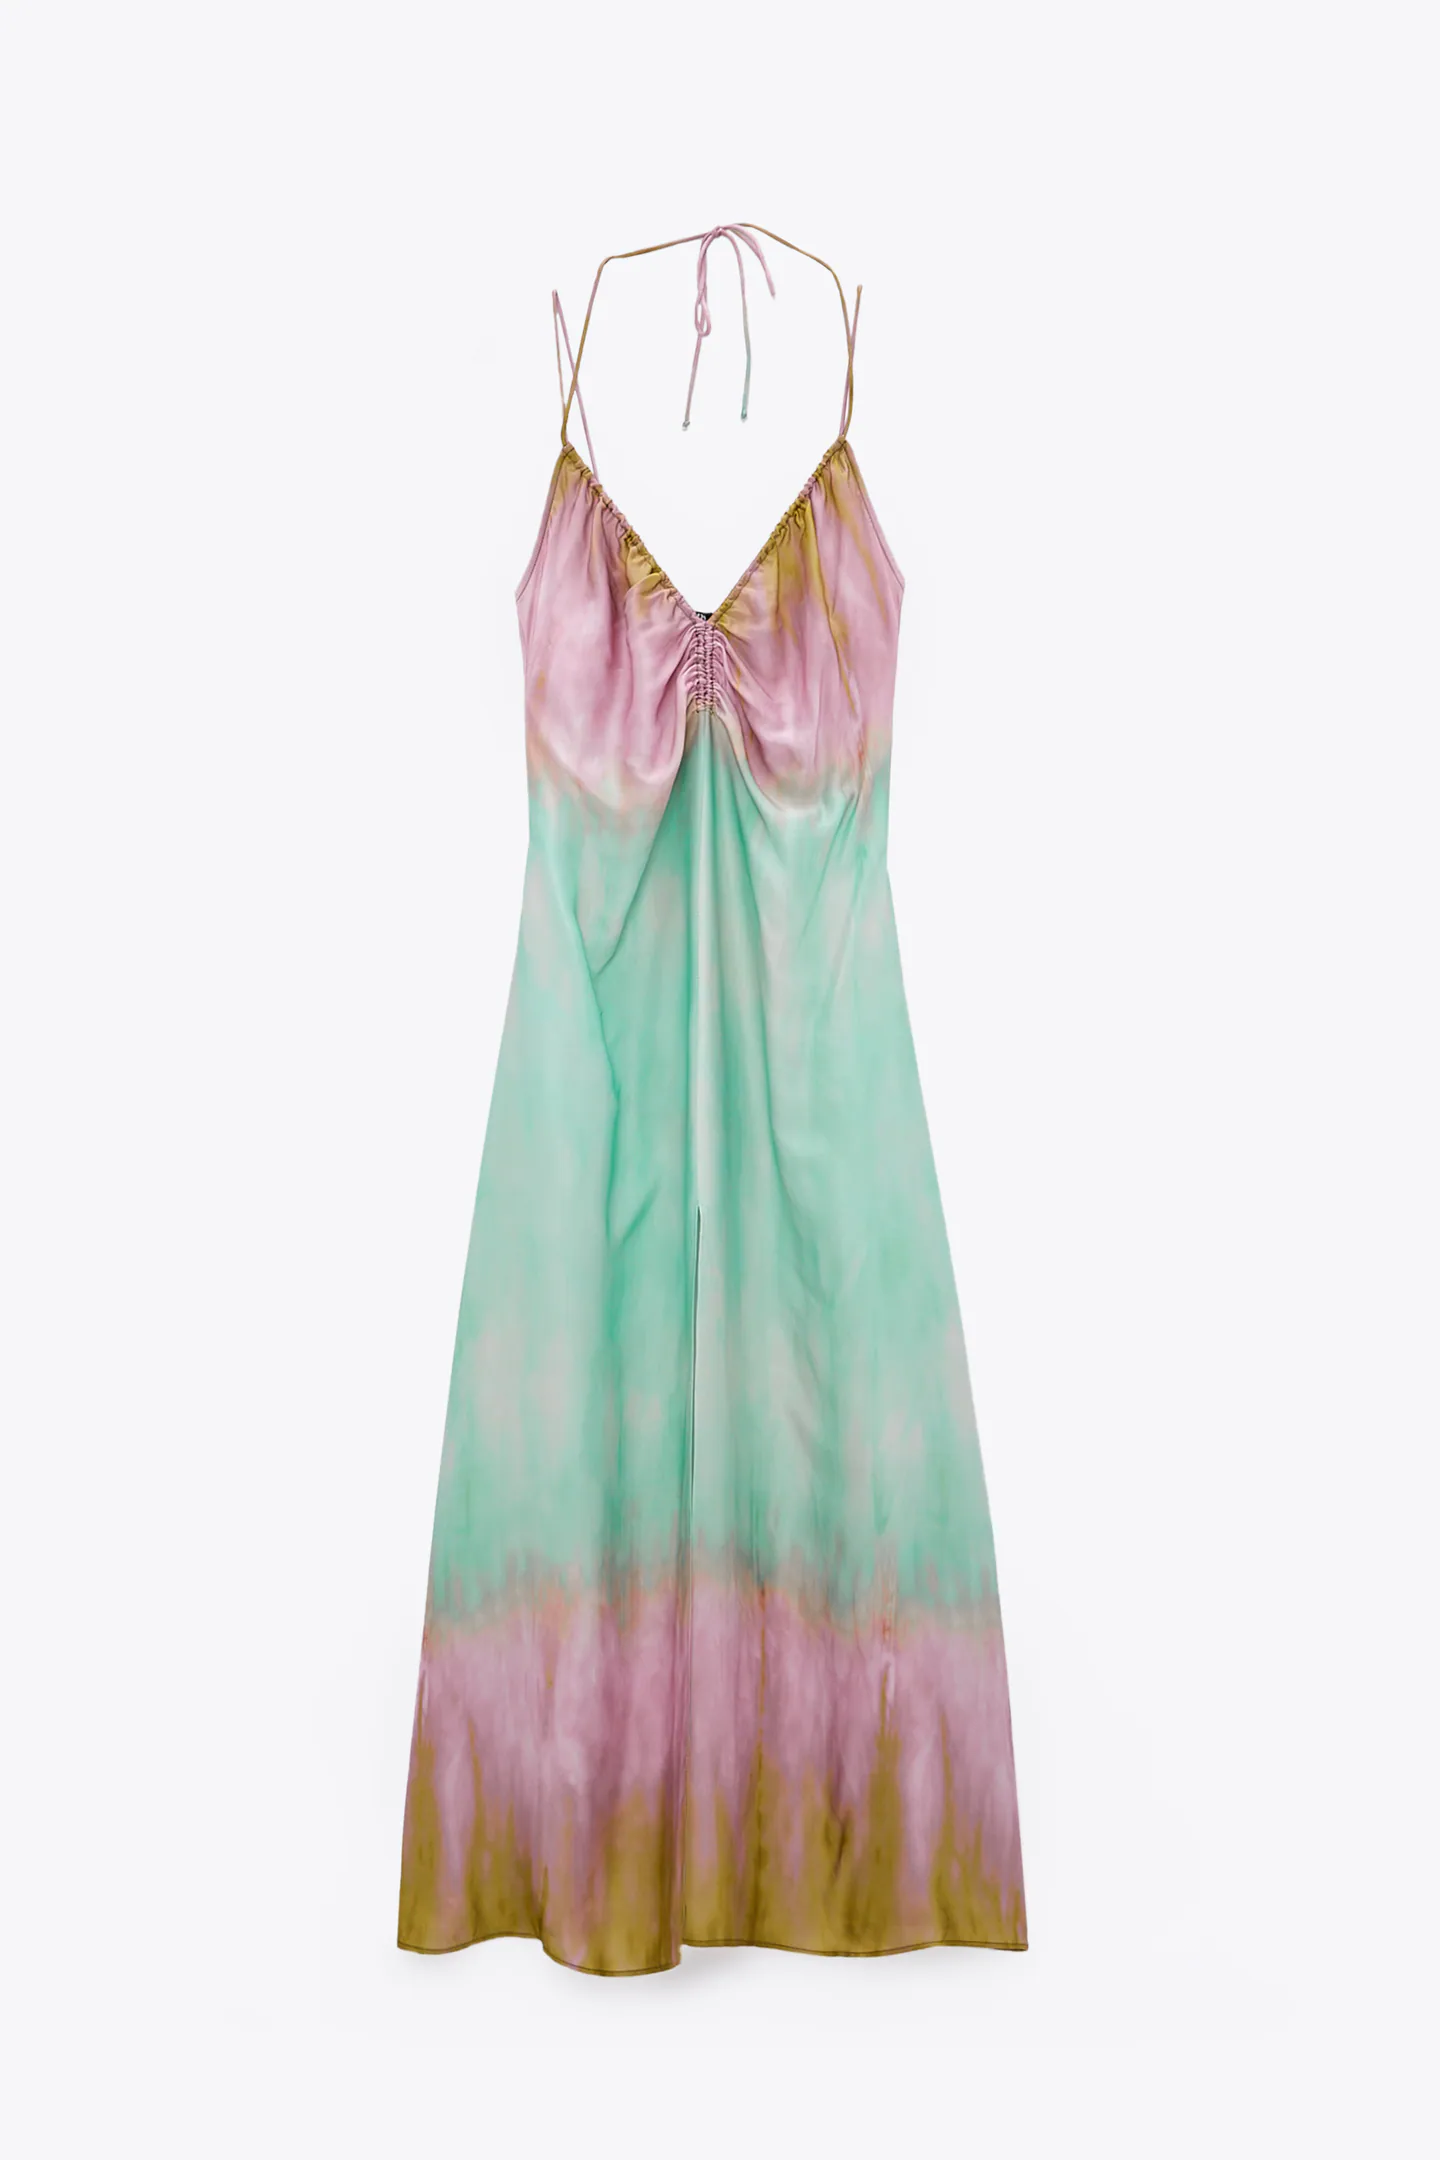 Zara Tie- Dye slip dress